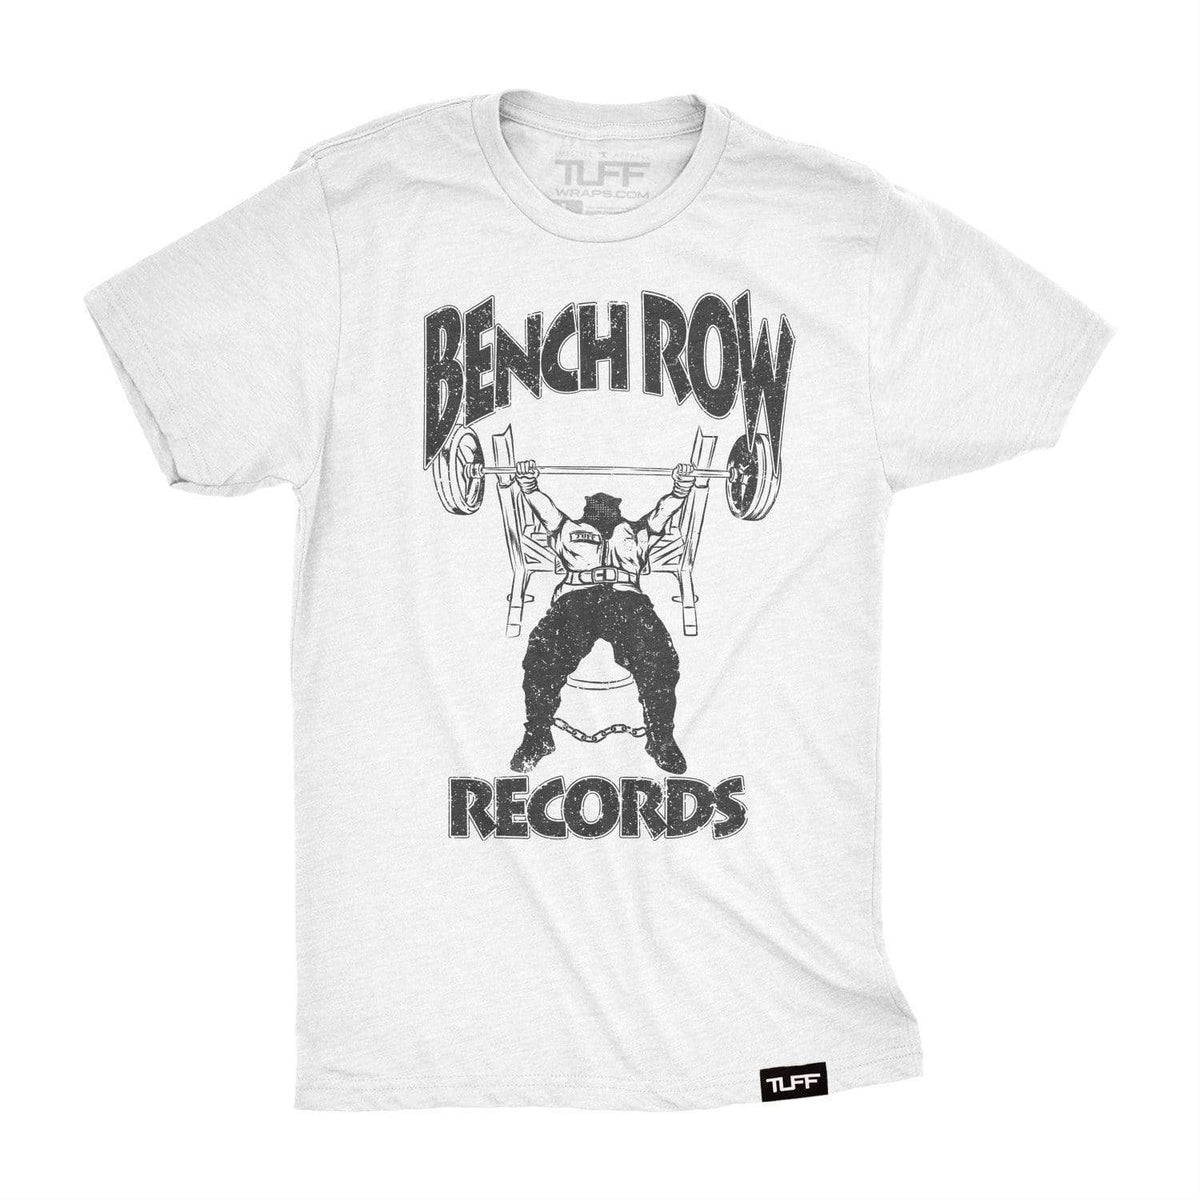 Bench Row Records Tee T-shirt